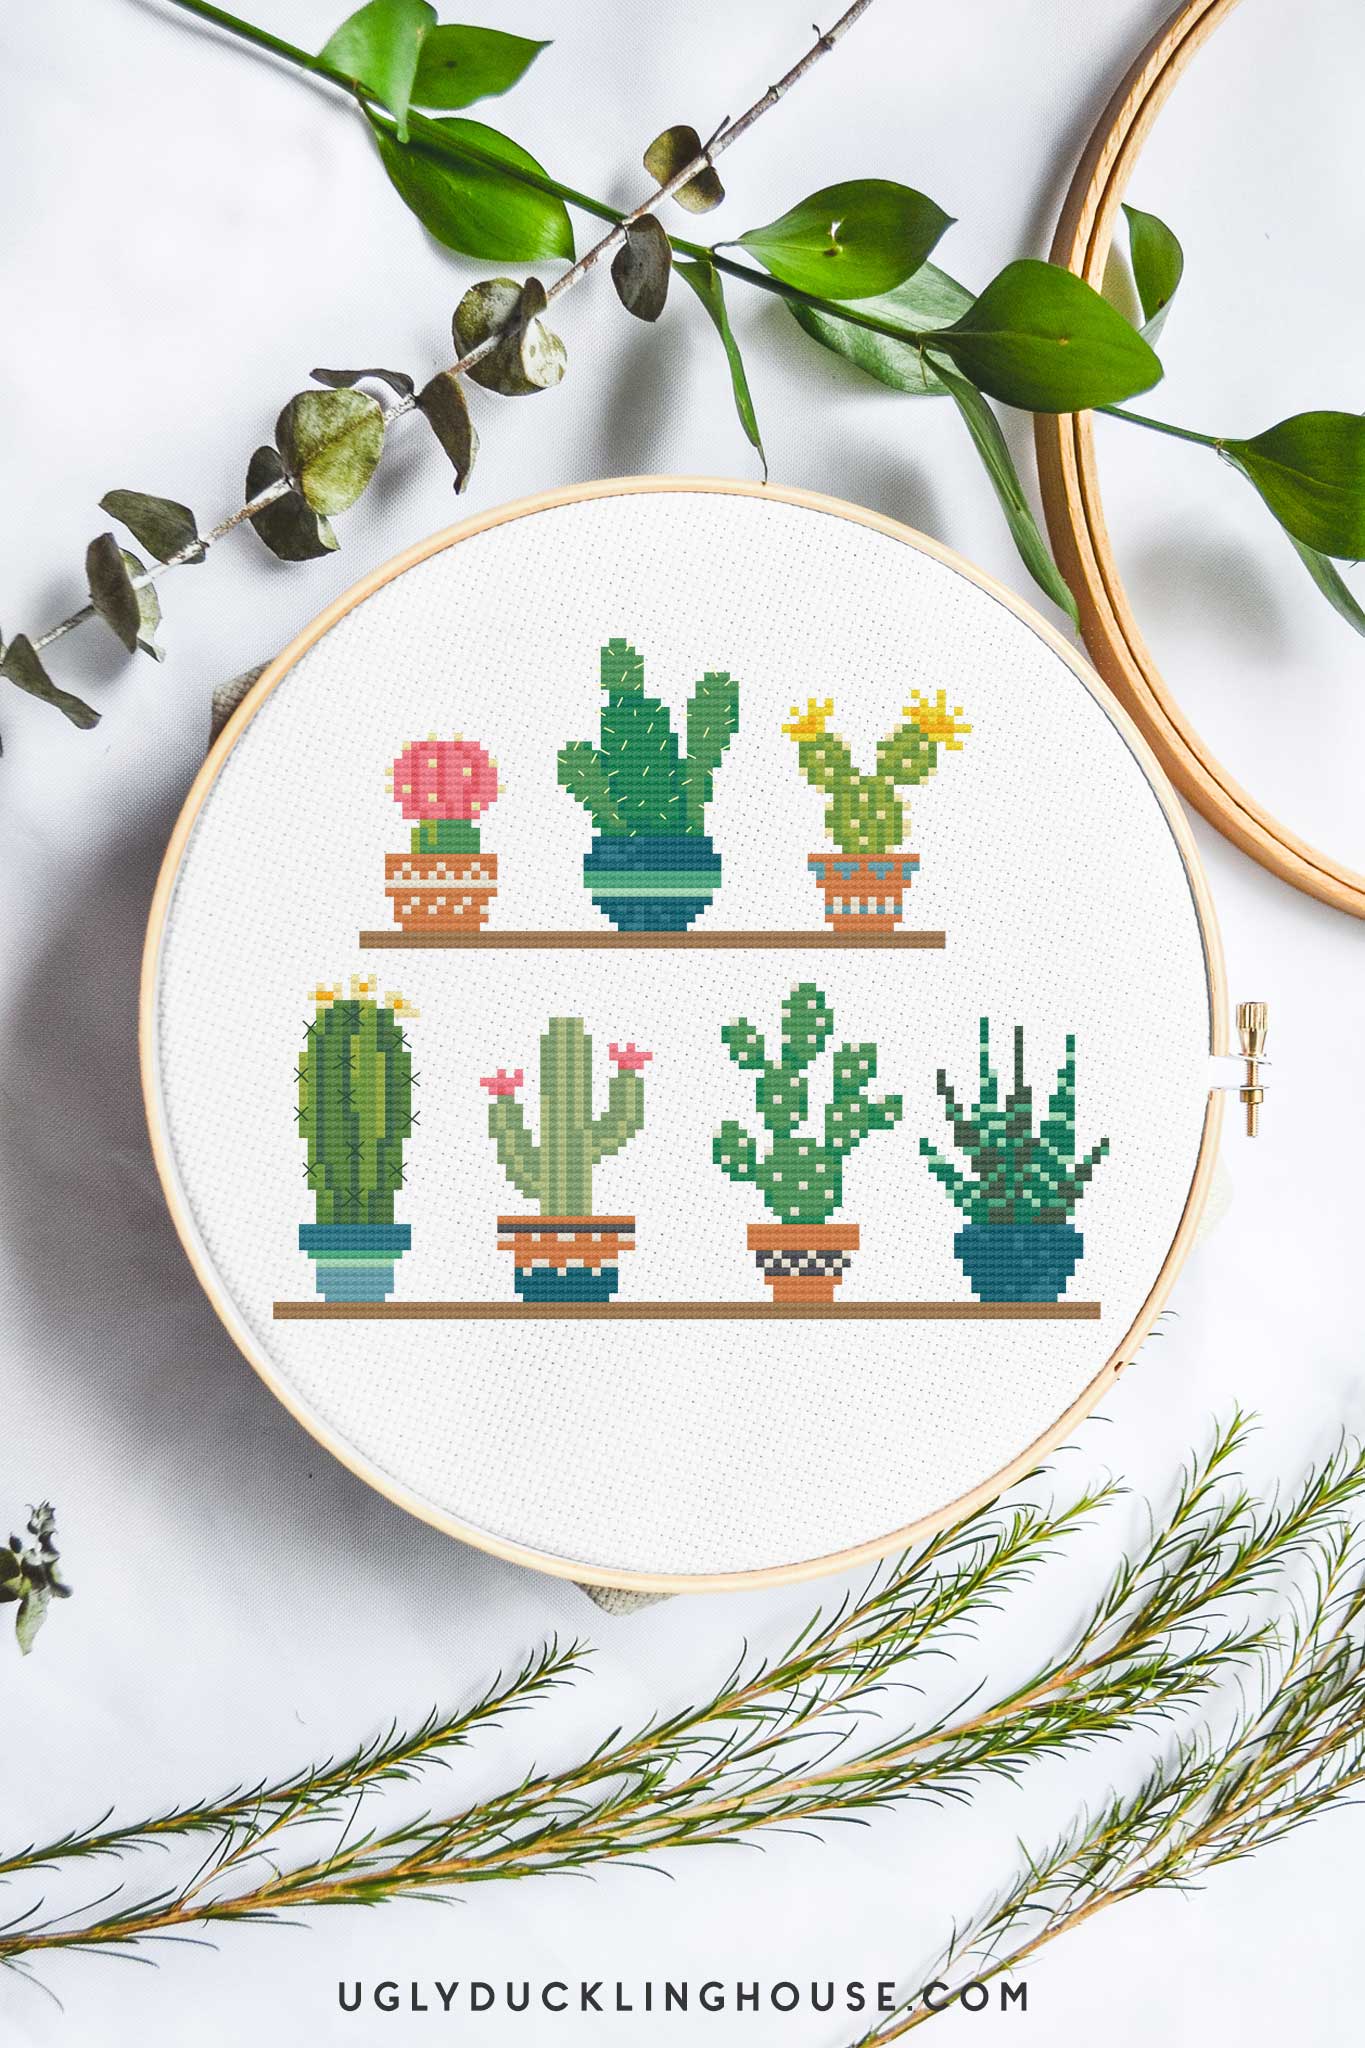 Easy-Peasy Cactus Themed Cross Stitching Design